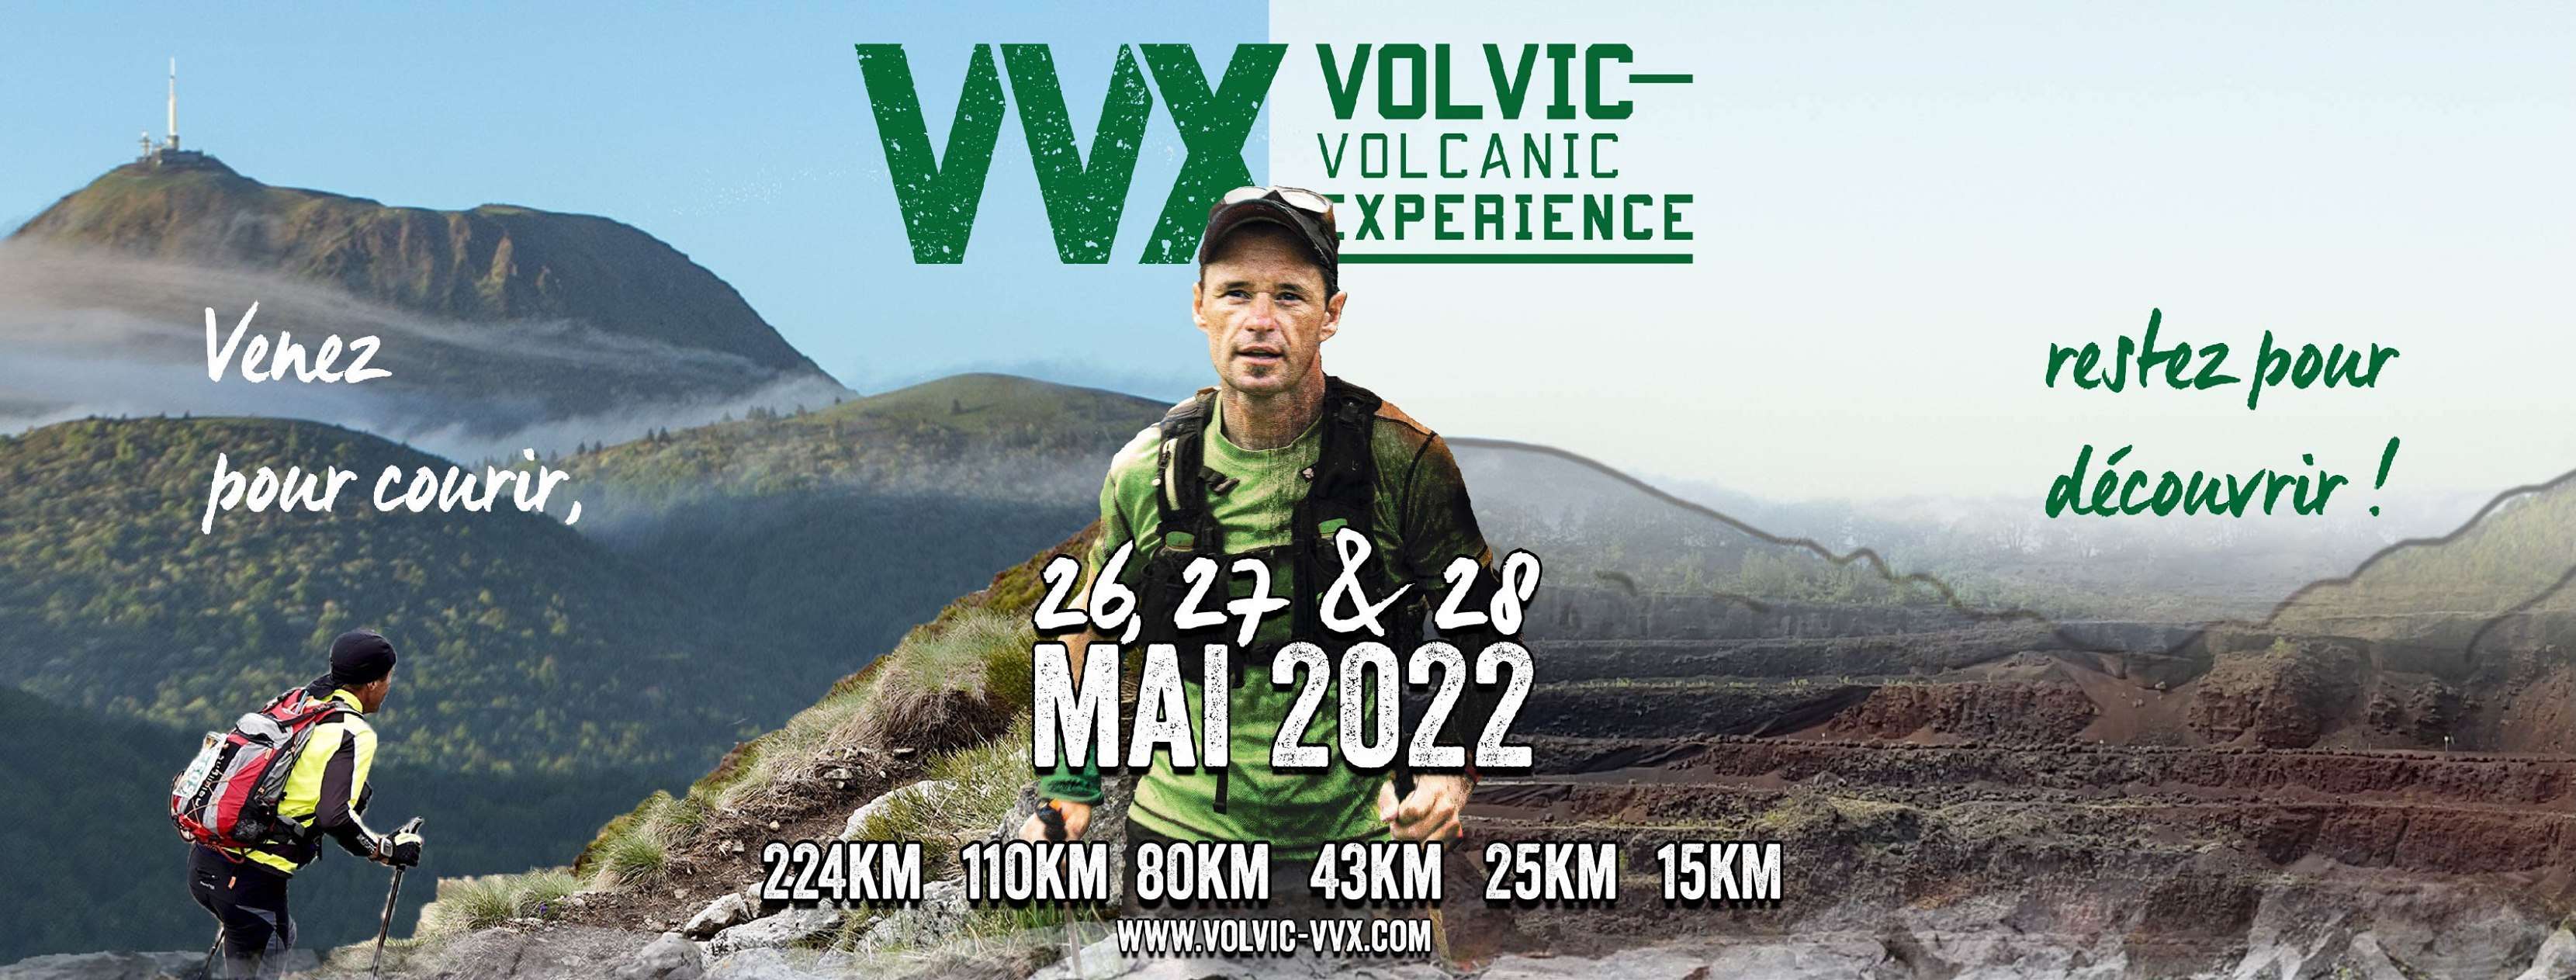 Volvic Volcanic Experience 26/27 mai 2022